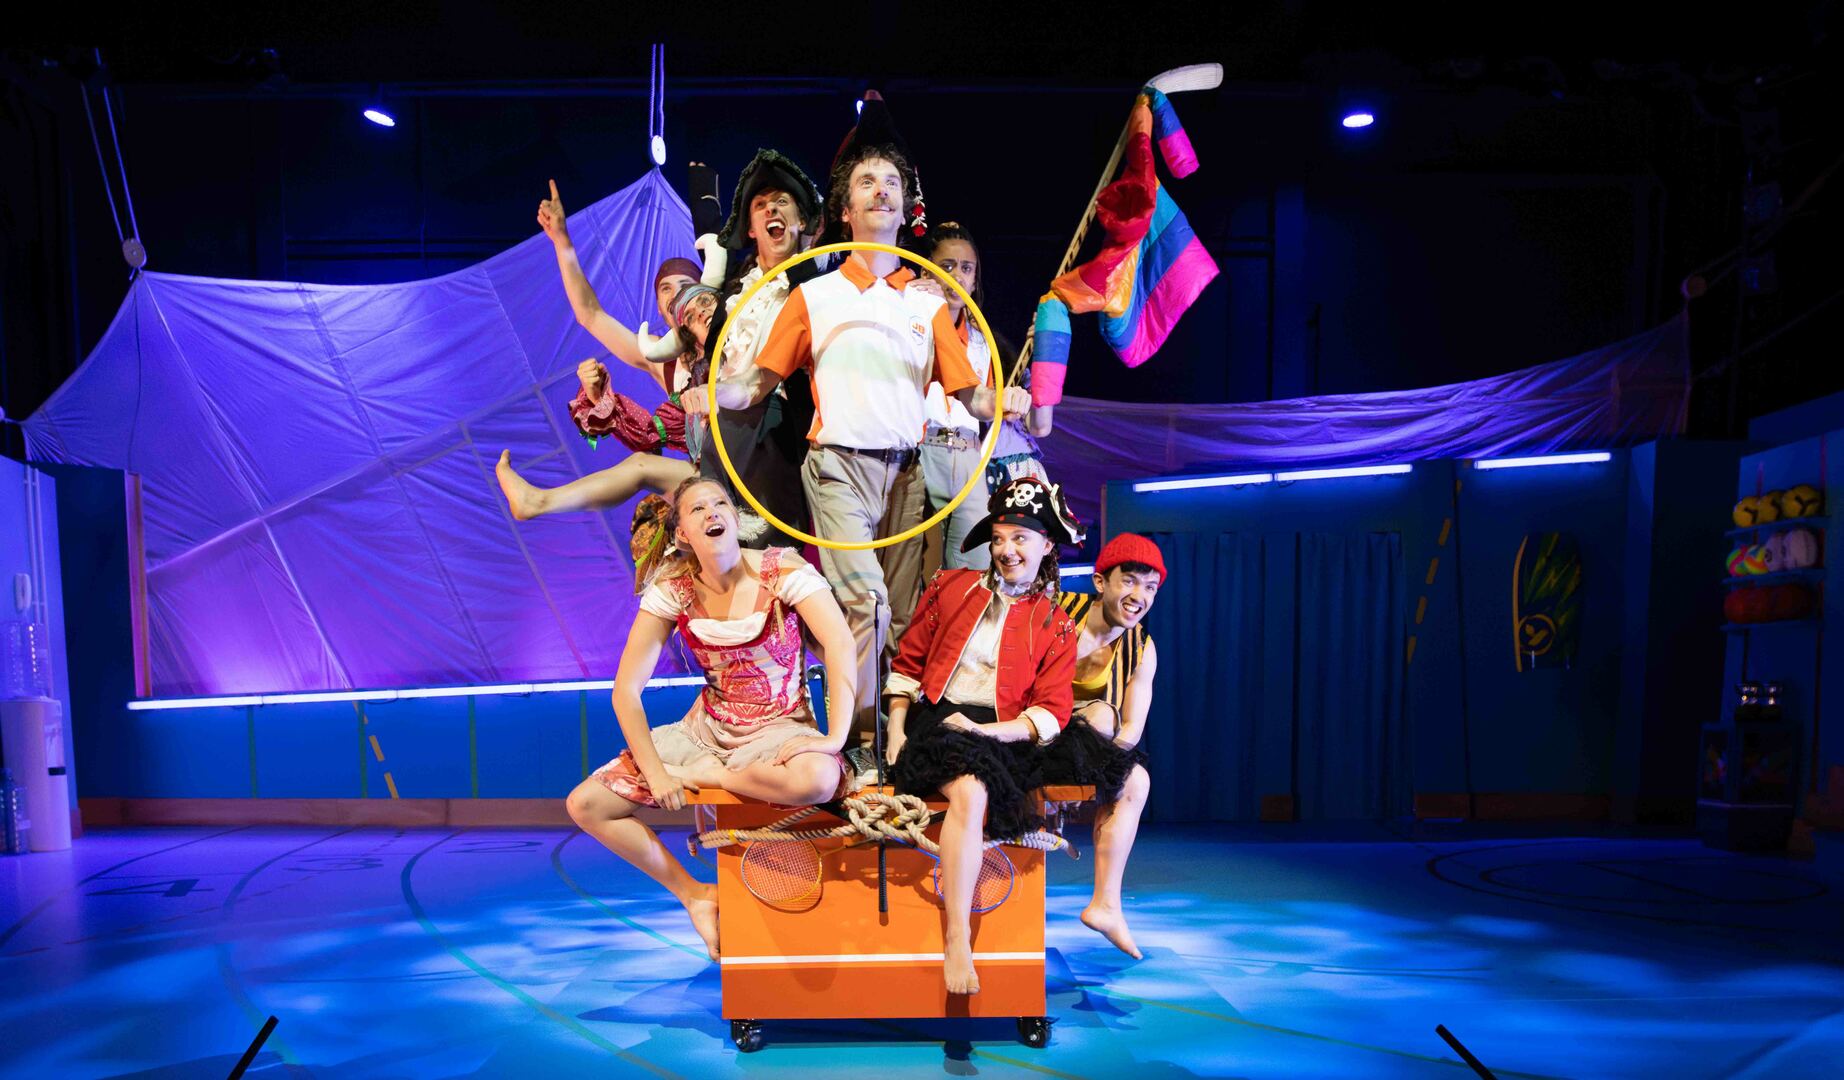 Pirates! – by Scottish Dance Theatre, London, England, United Kingdom